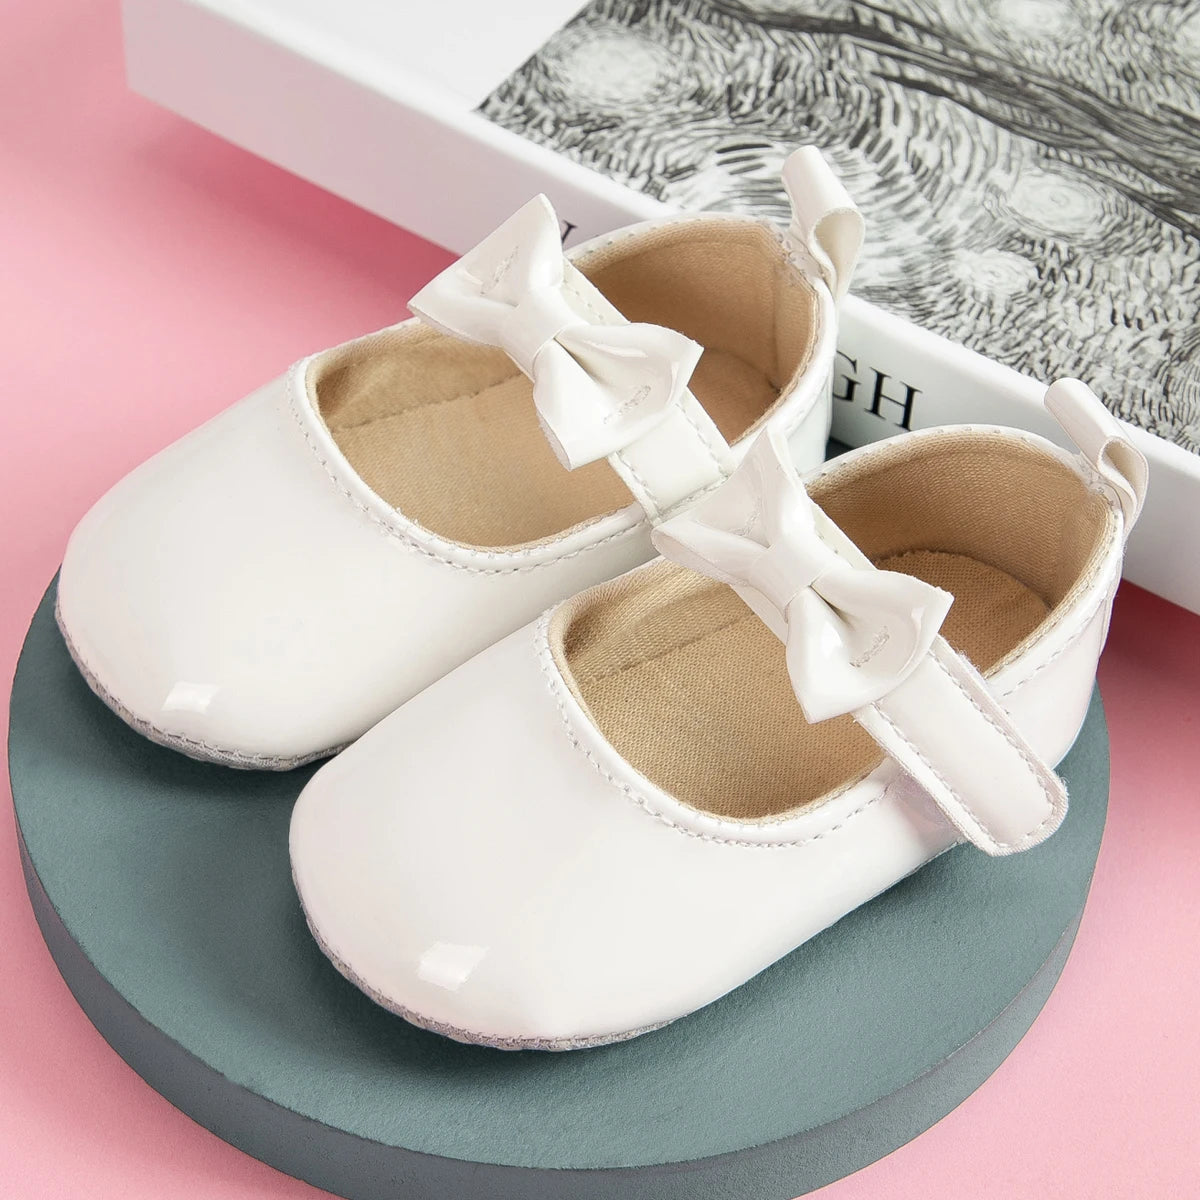 KIDSUN Newborn Baby Shoes Infant Girls Shoes